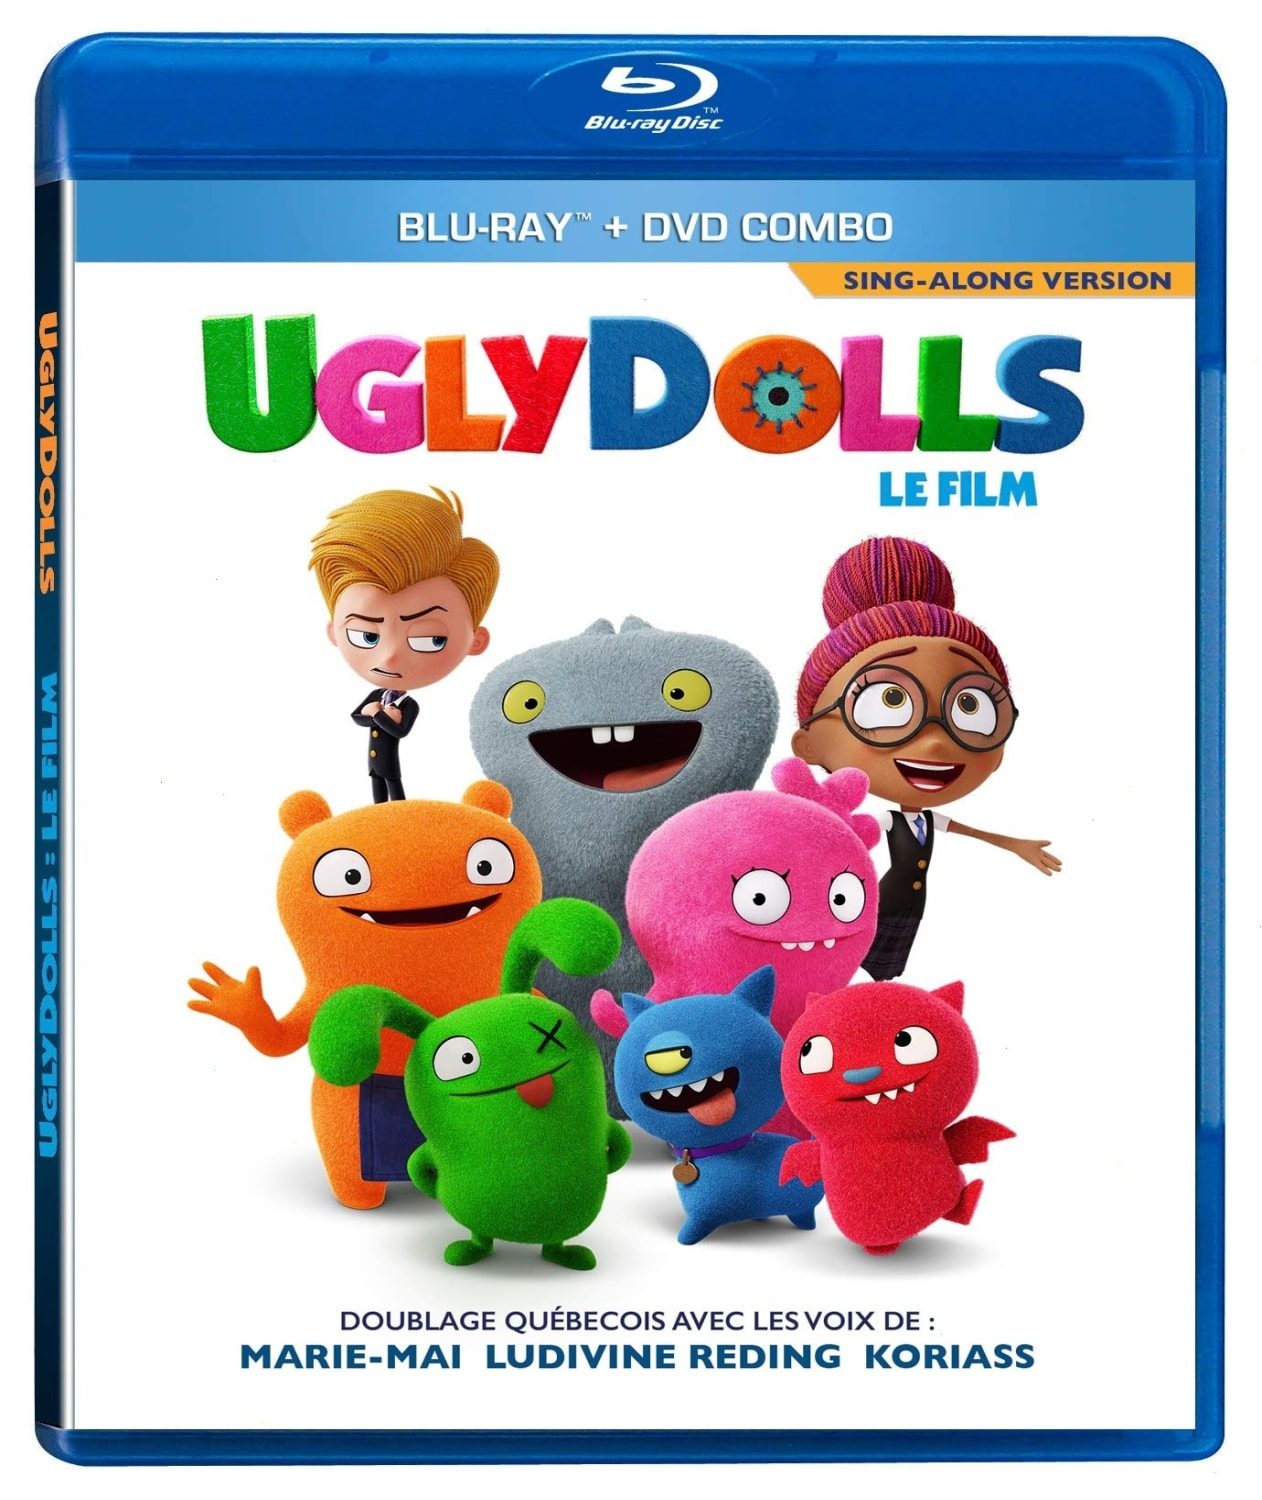 UglyDolls (DVD / Bluray)